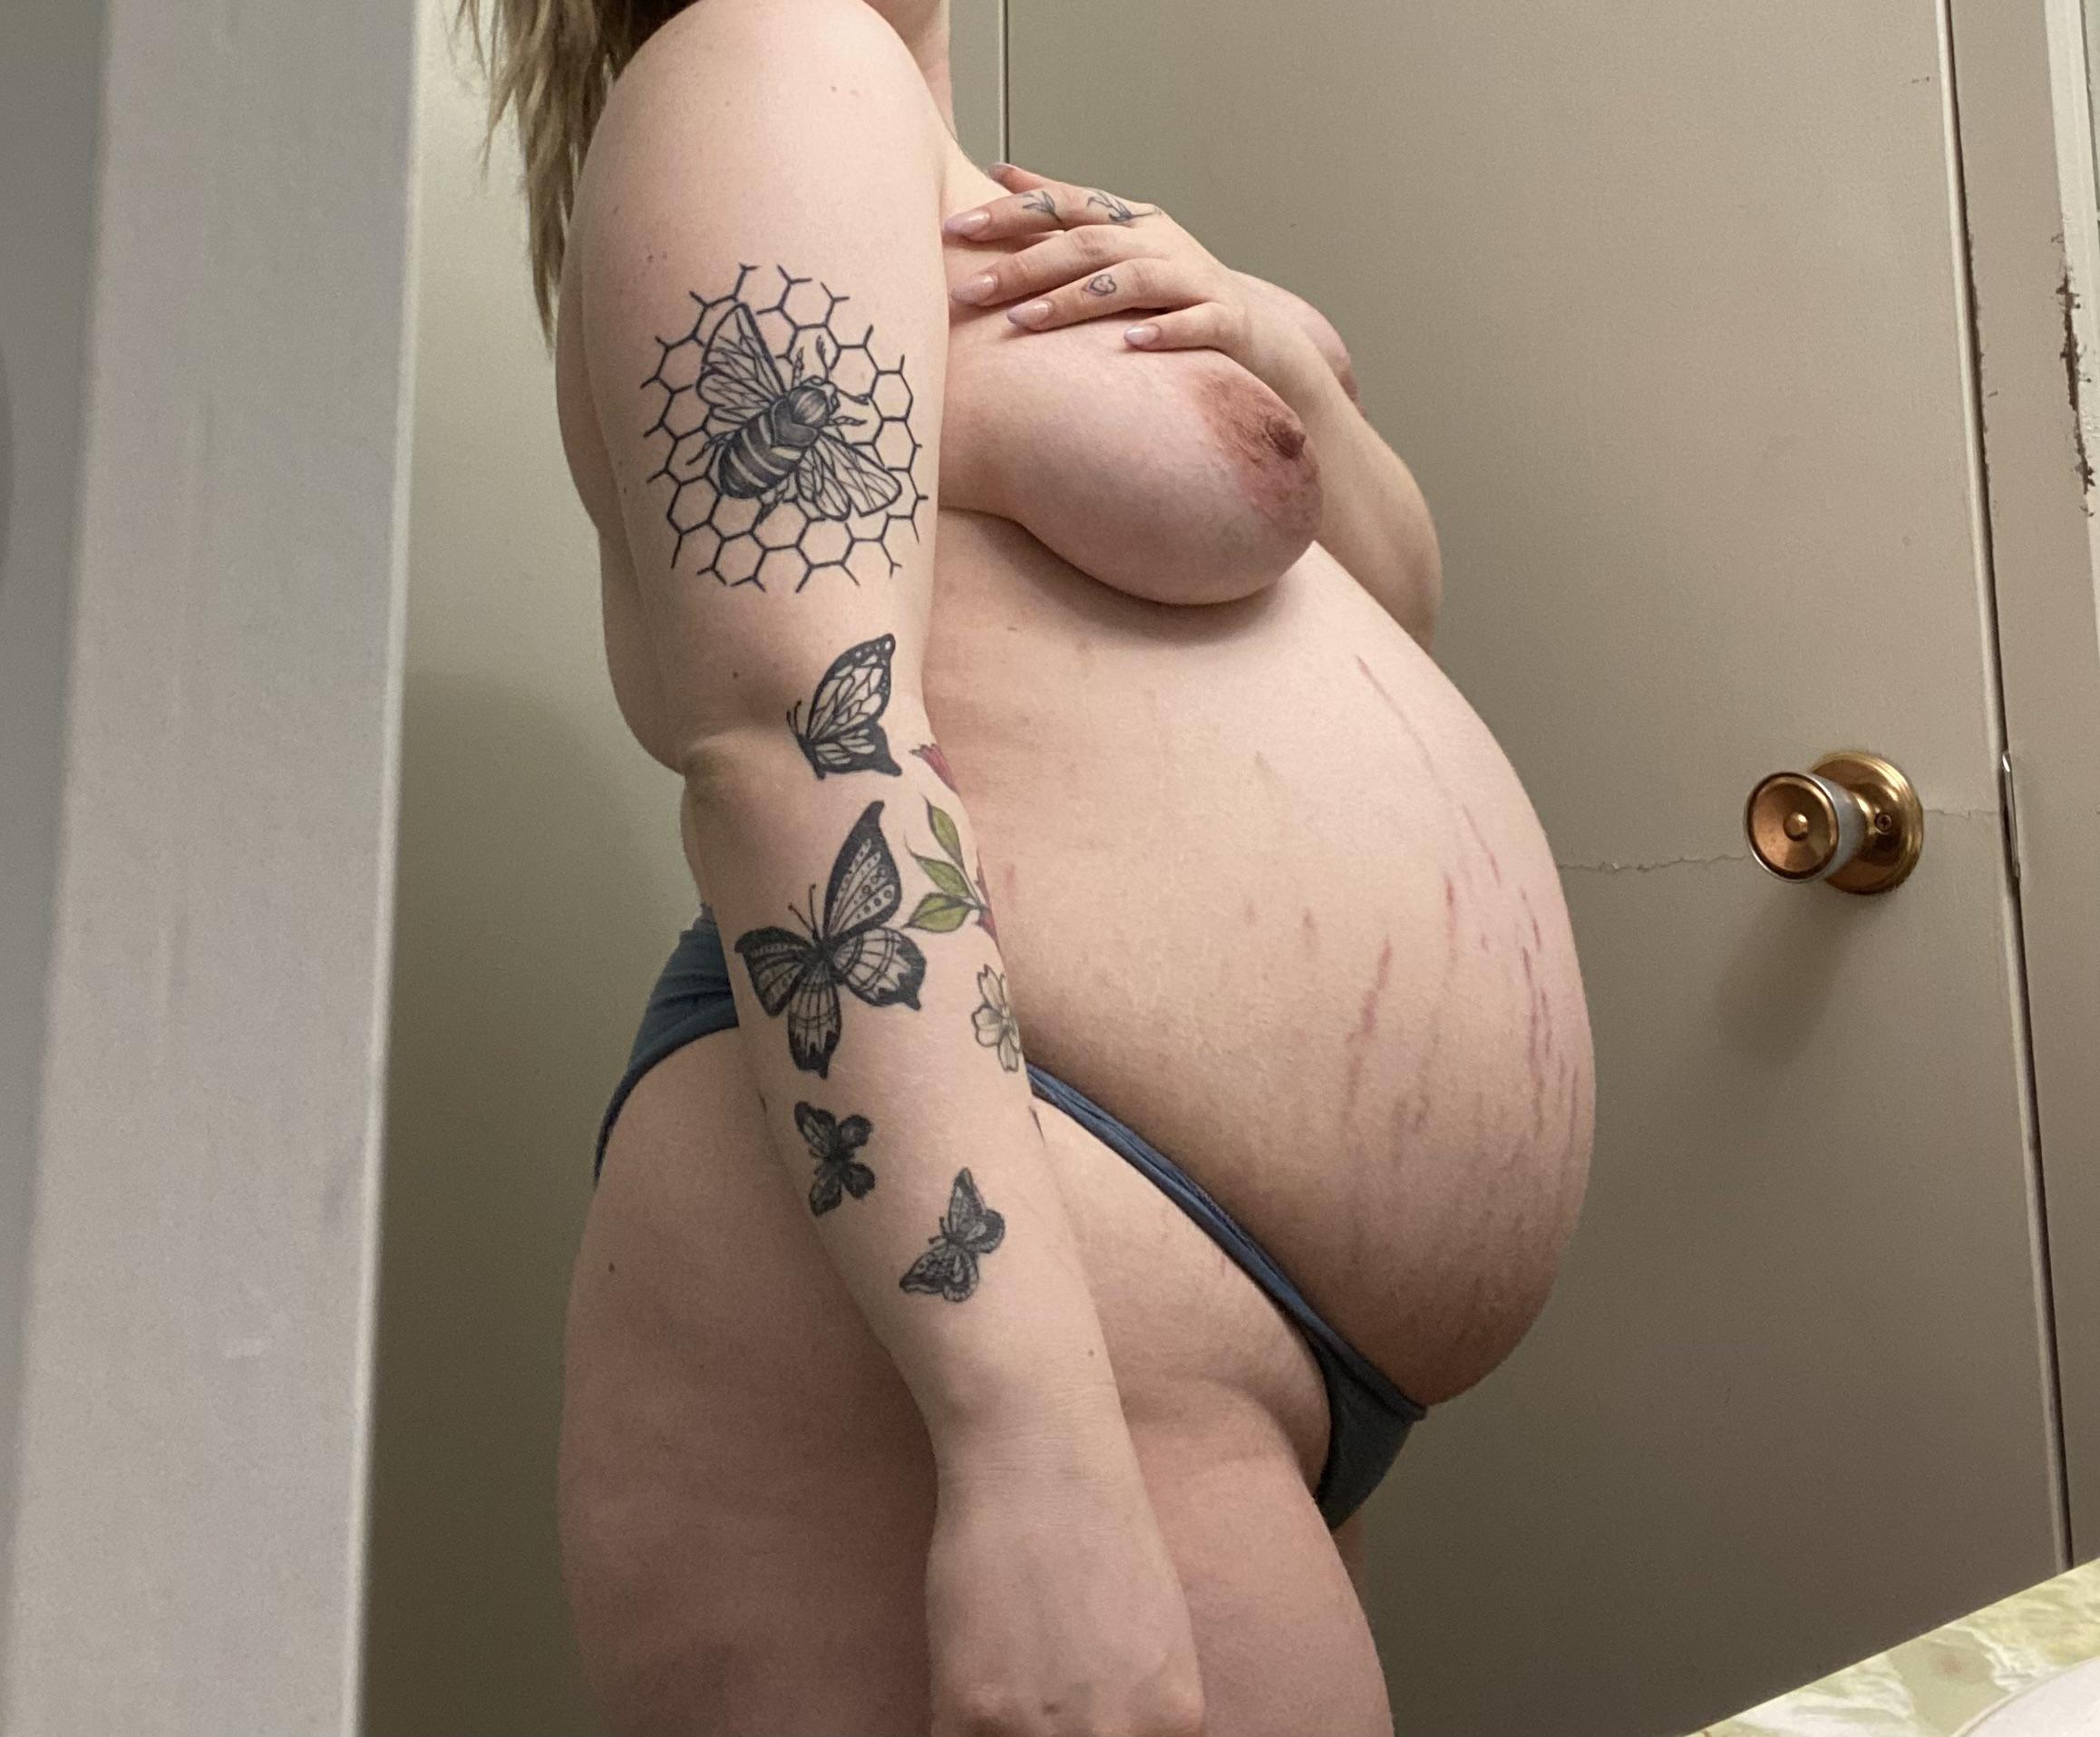 Pregnant Girls Fuck